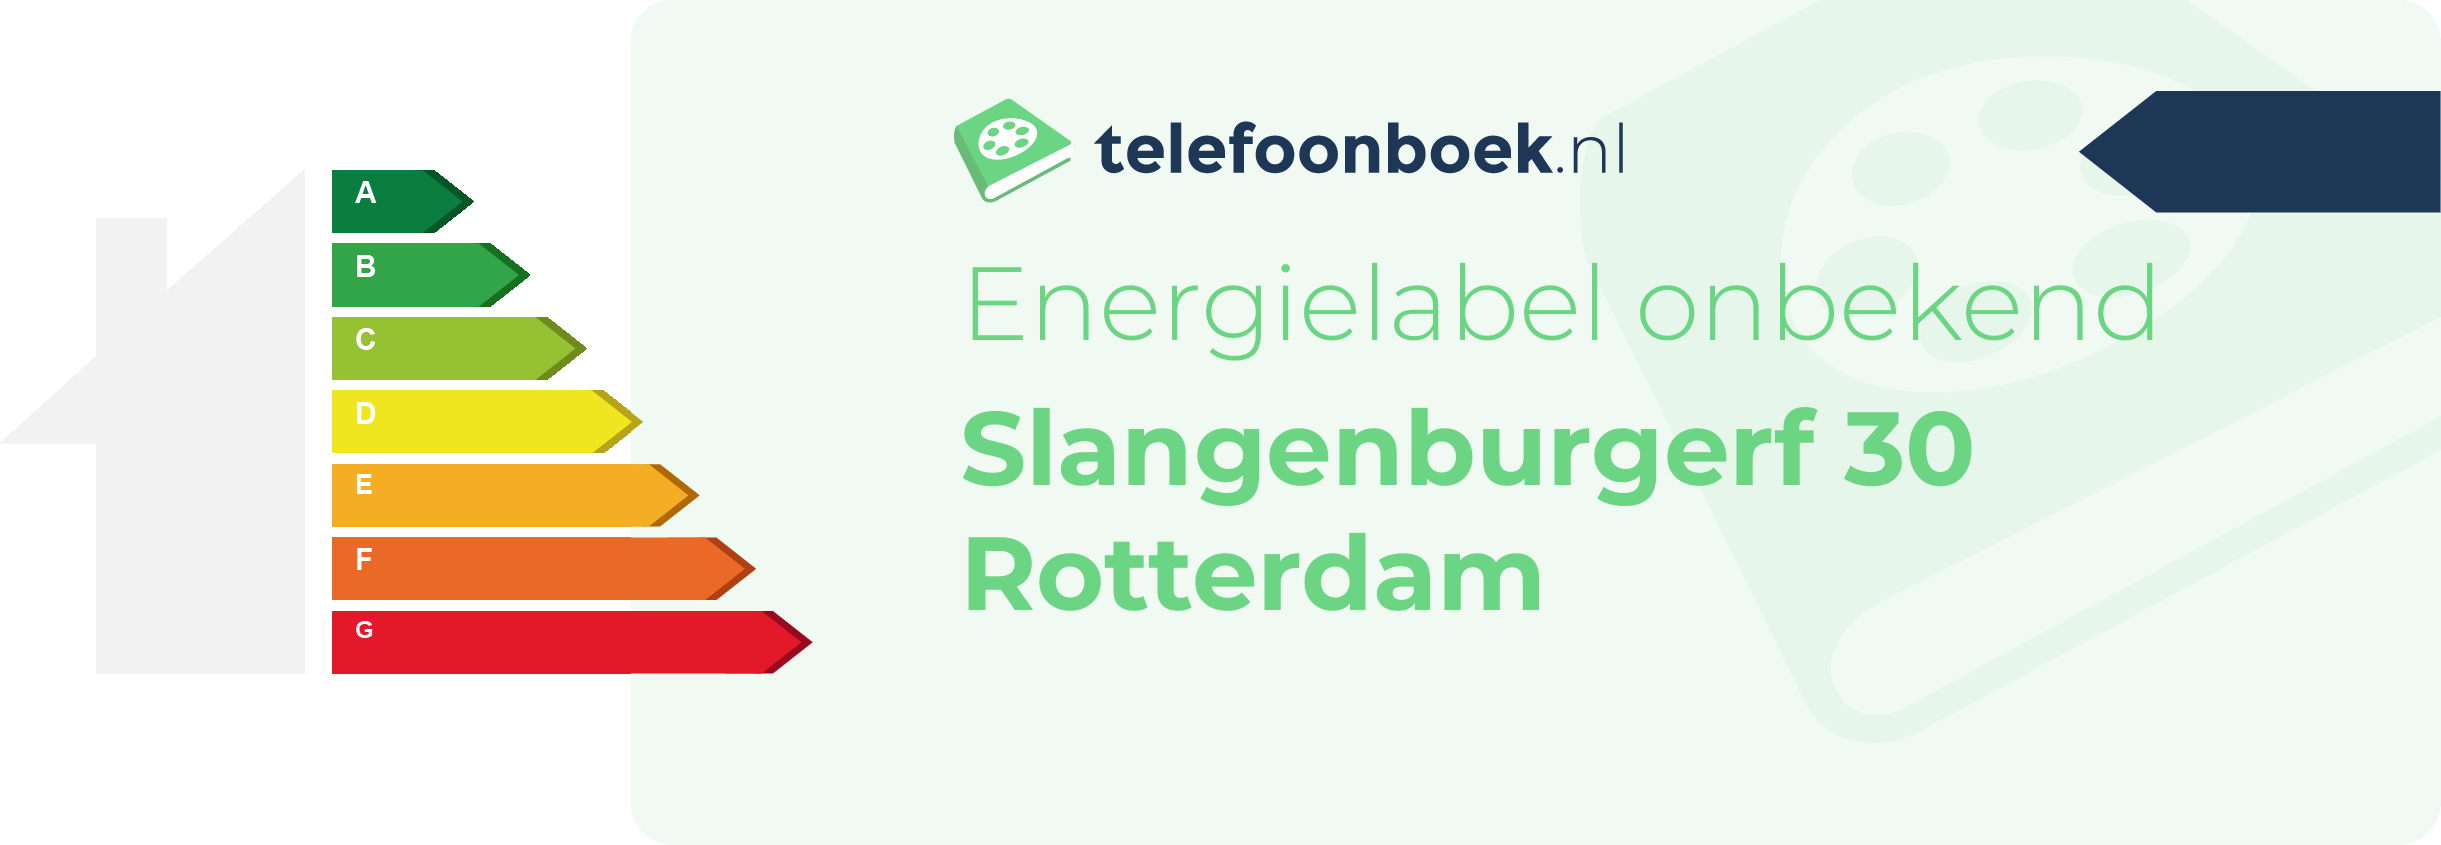 Energielabel Slangenburgerf 30 Rotterdam